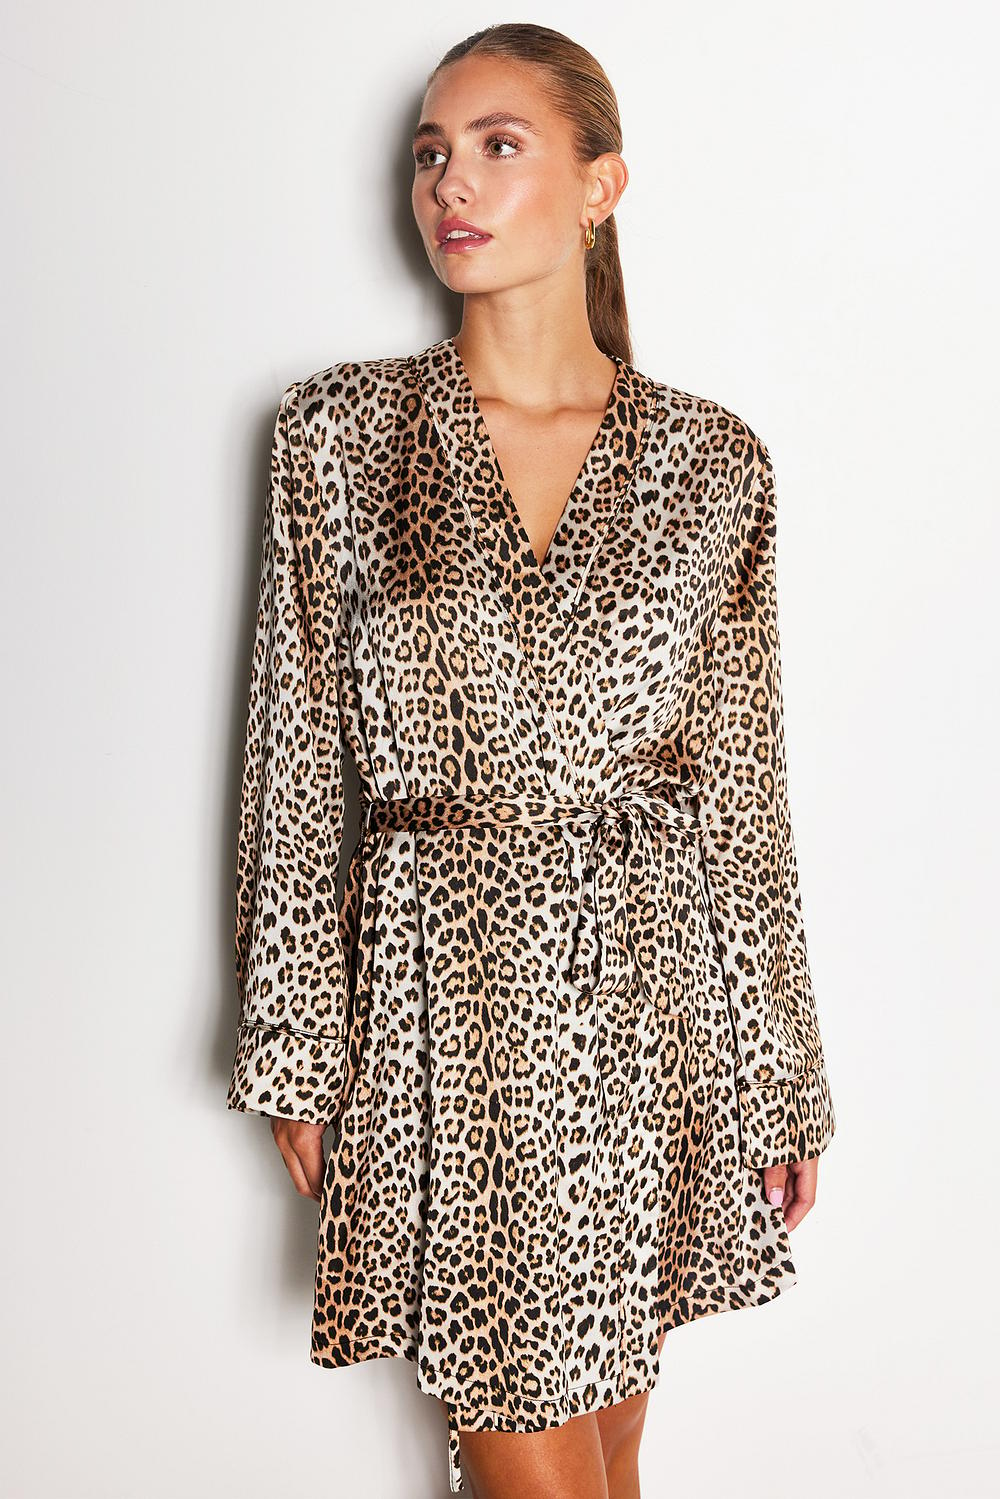 Brown bathrobe with leopard print